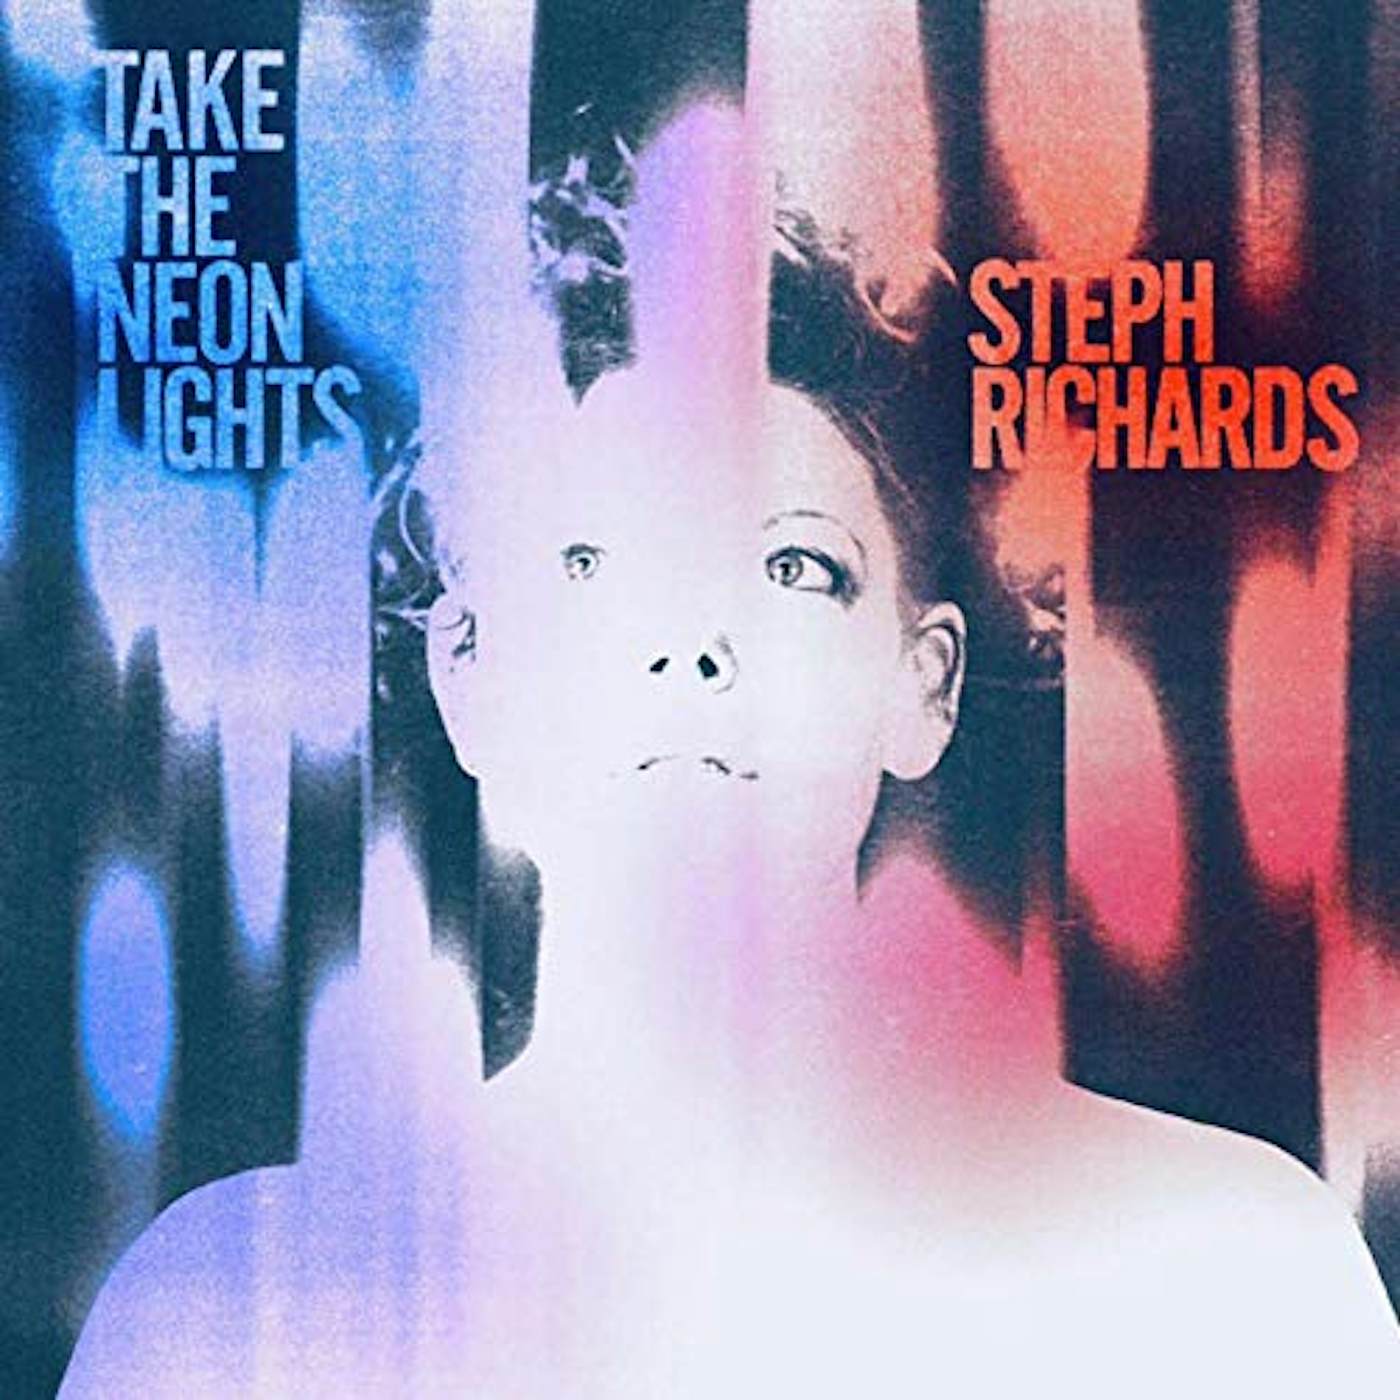 Steph Richards TAKE THE NEON LIGHTS CD